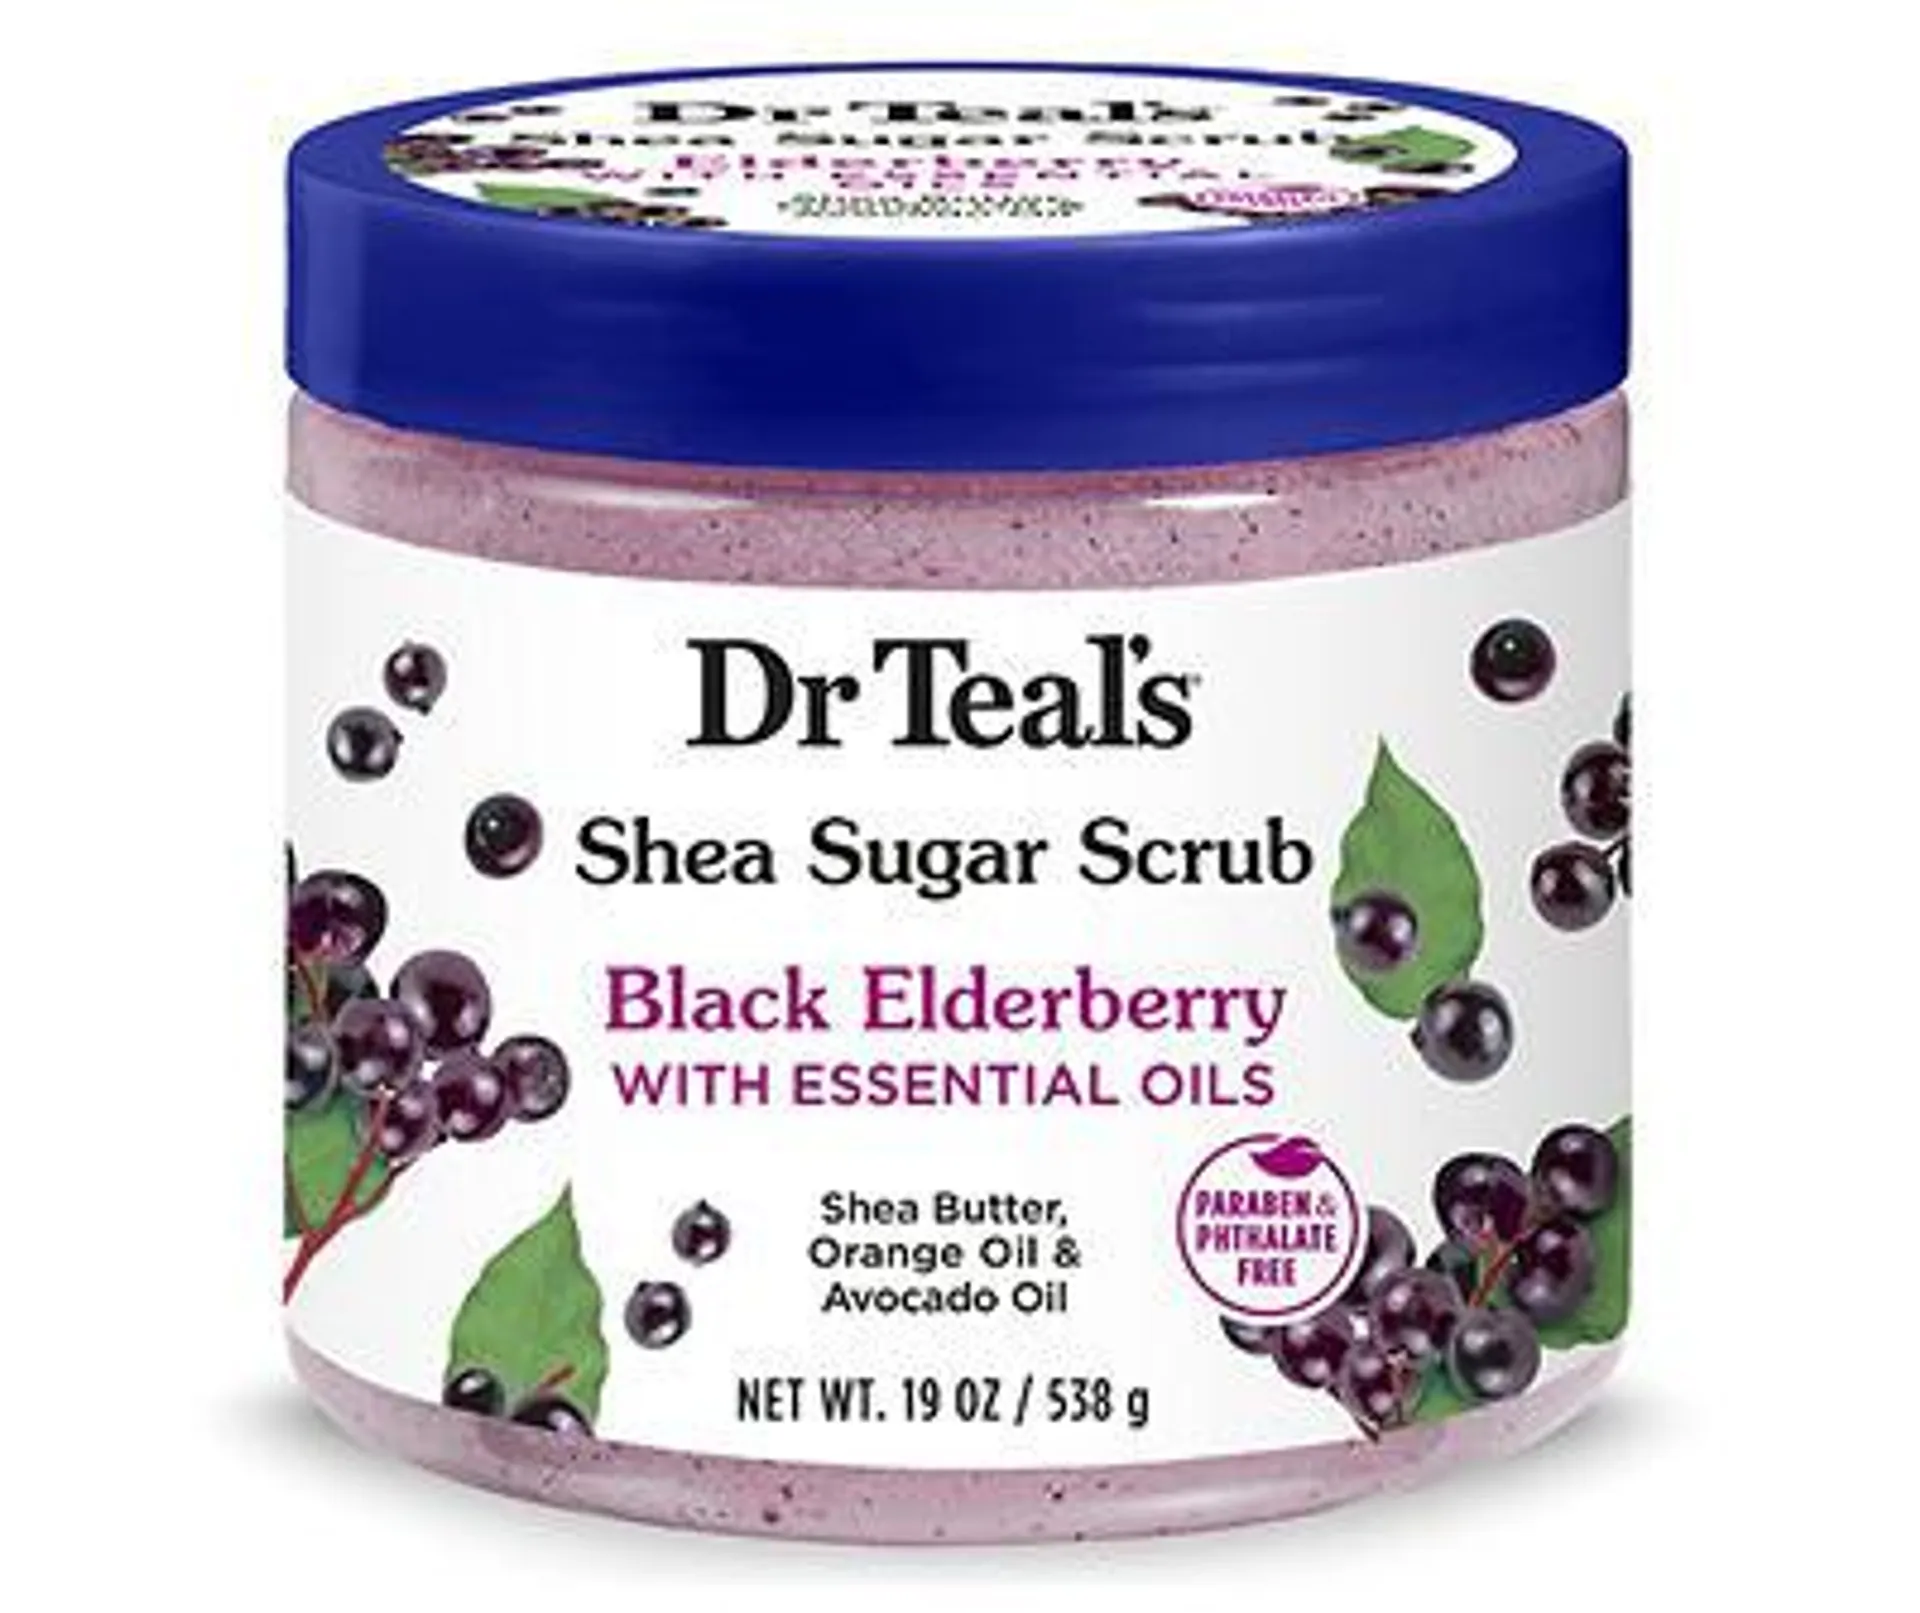 Black Elderberry & Essential Oils Shea Sugar Scrub, 19 Oz.